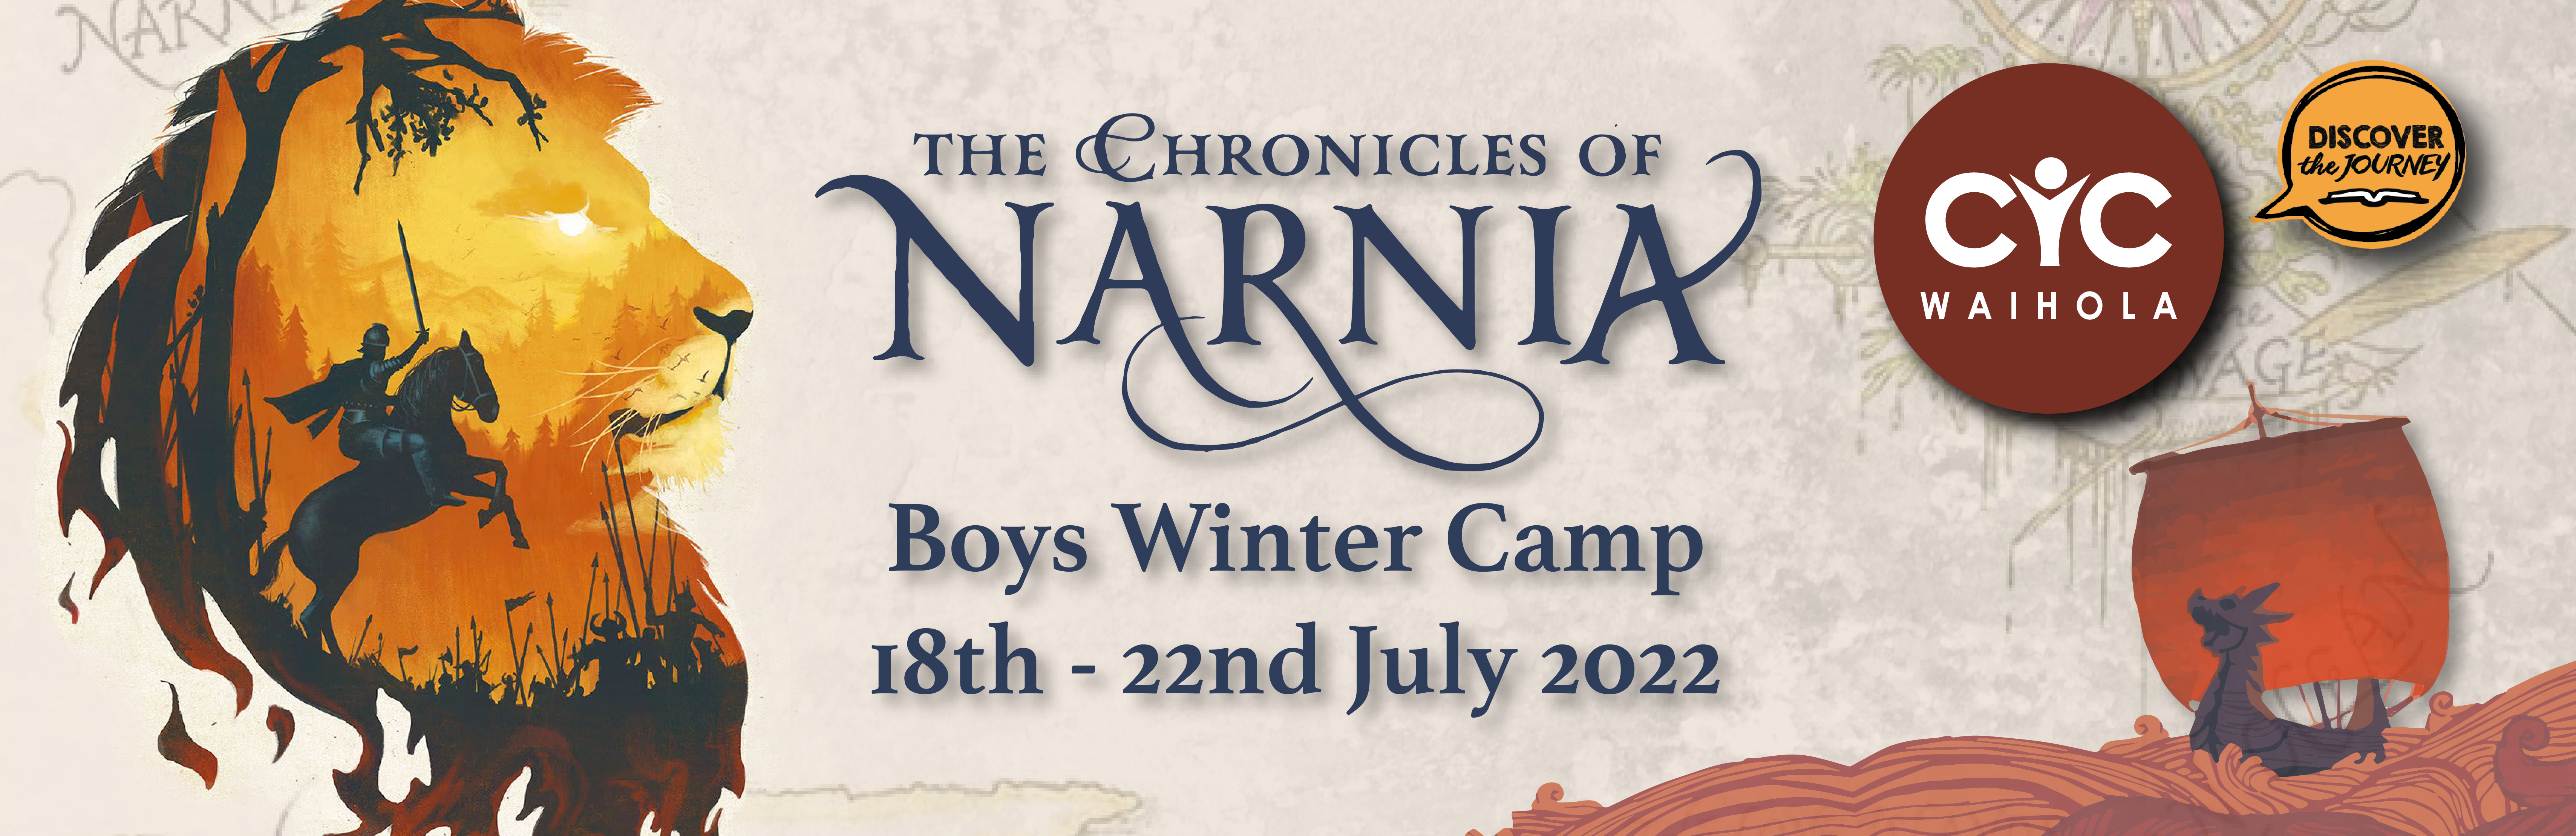 Boys Winter Camp 2022 - EVENT-01